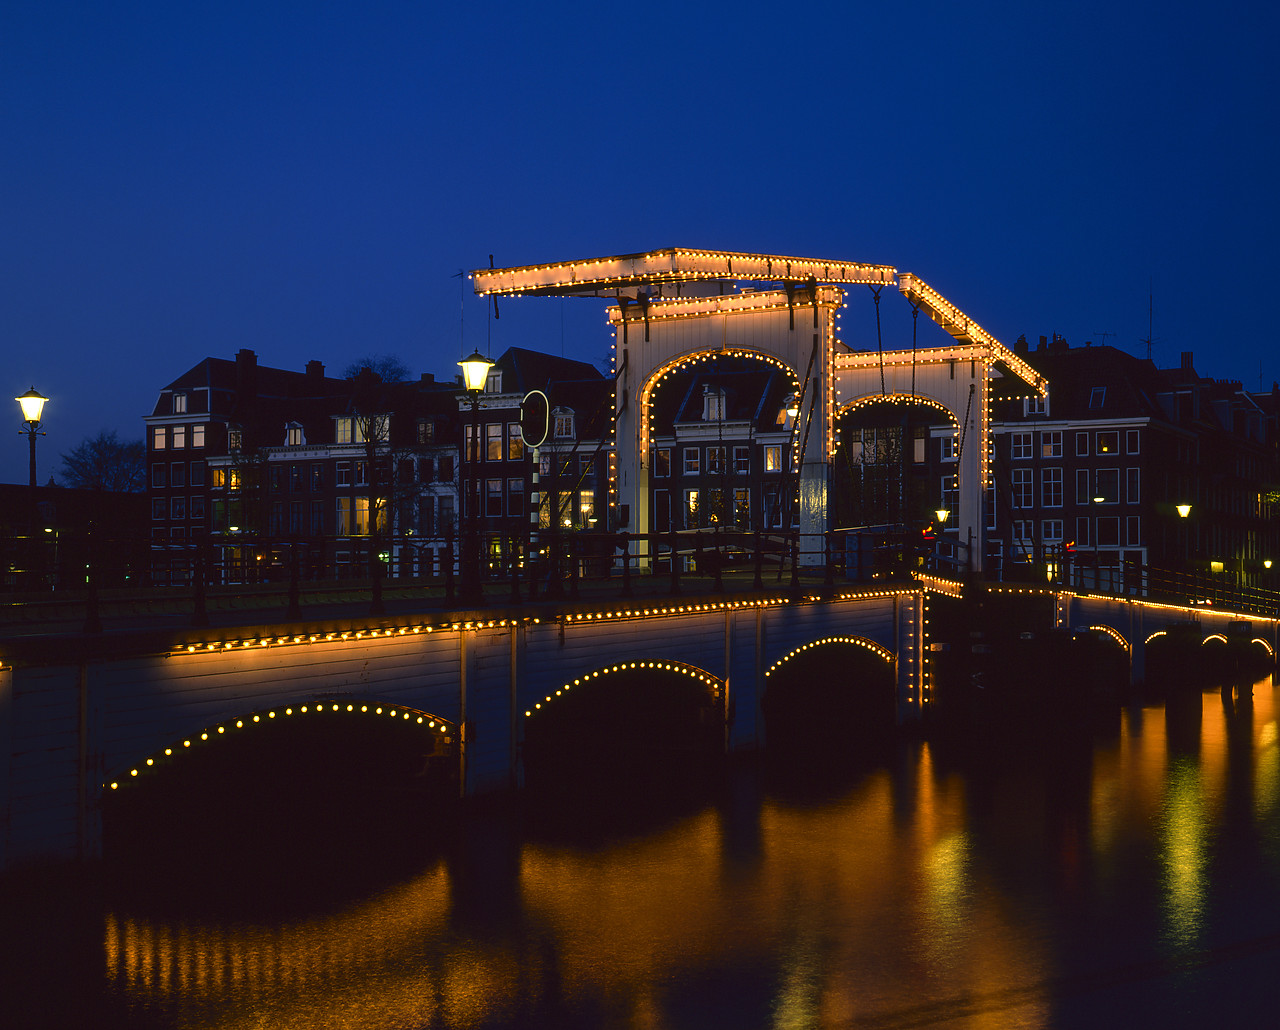 #892039-1 - Magere Brug (Skinny Bridge) at Night, Amsterdam, Holland